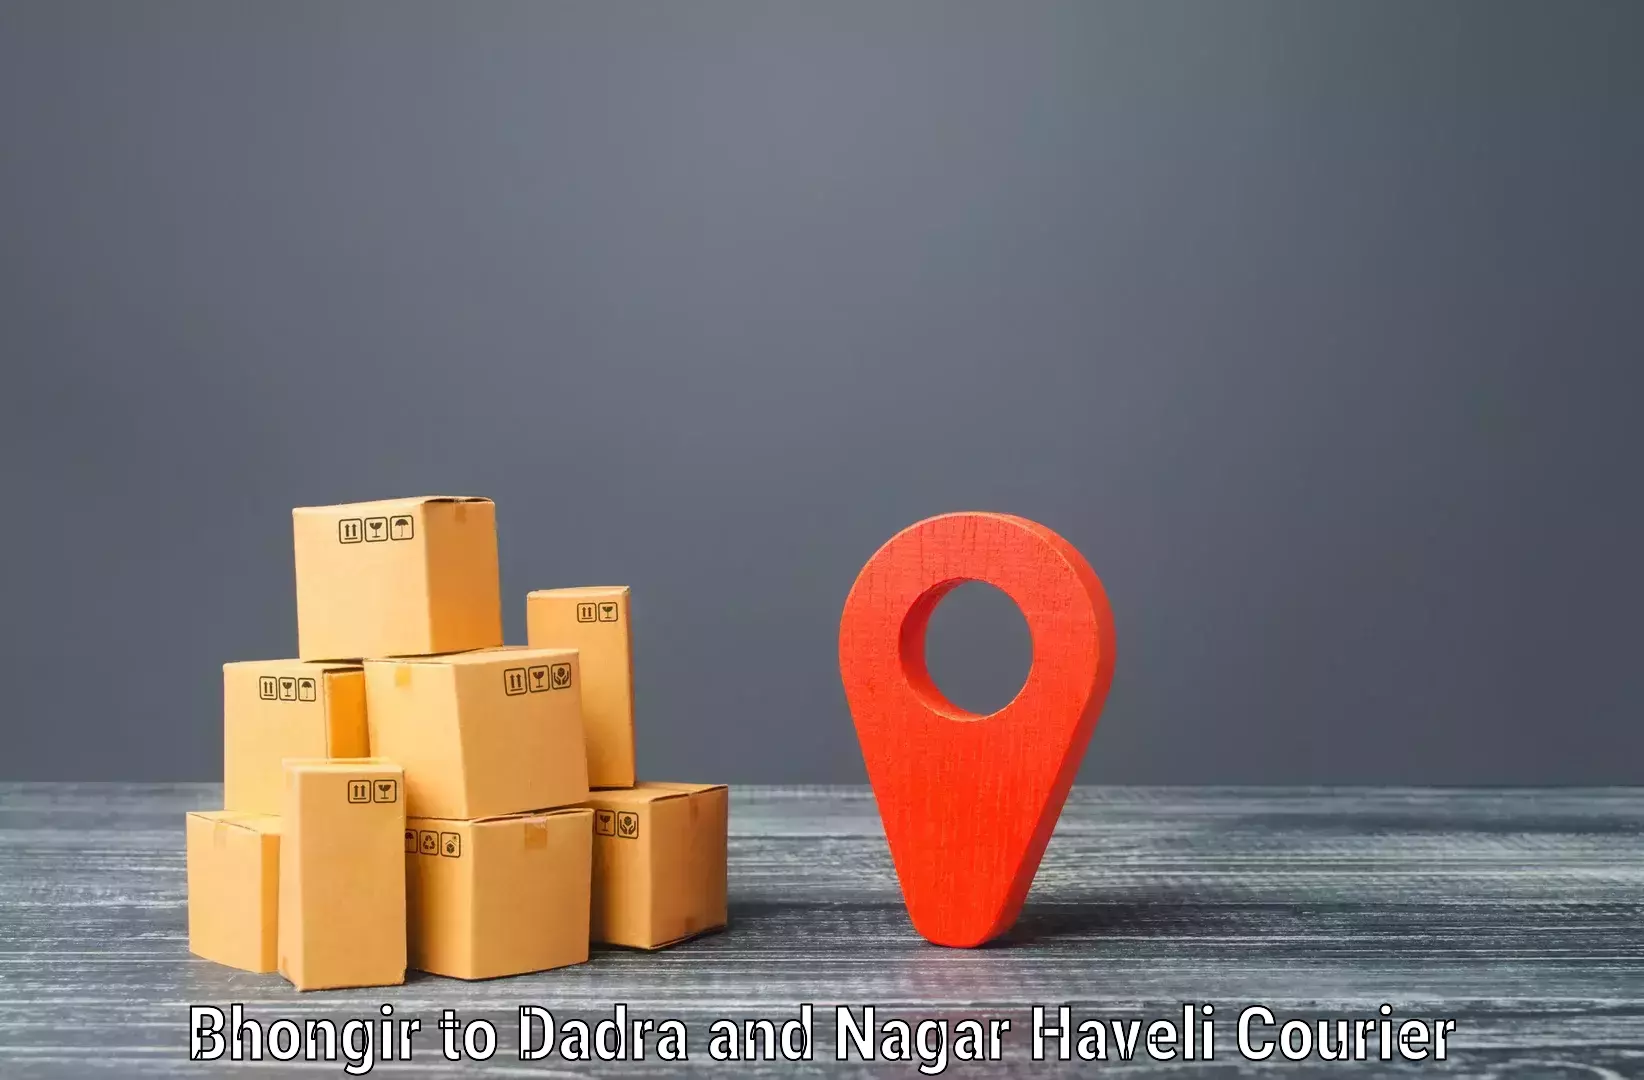 Smart courier technologies Bhongir to Silvassa